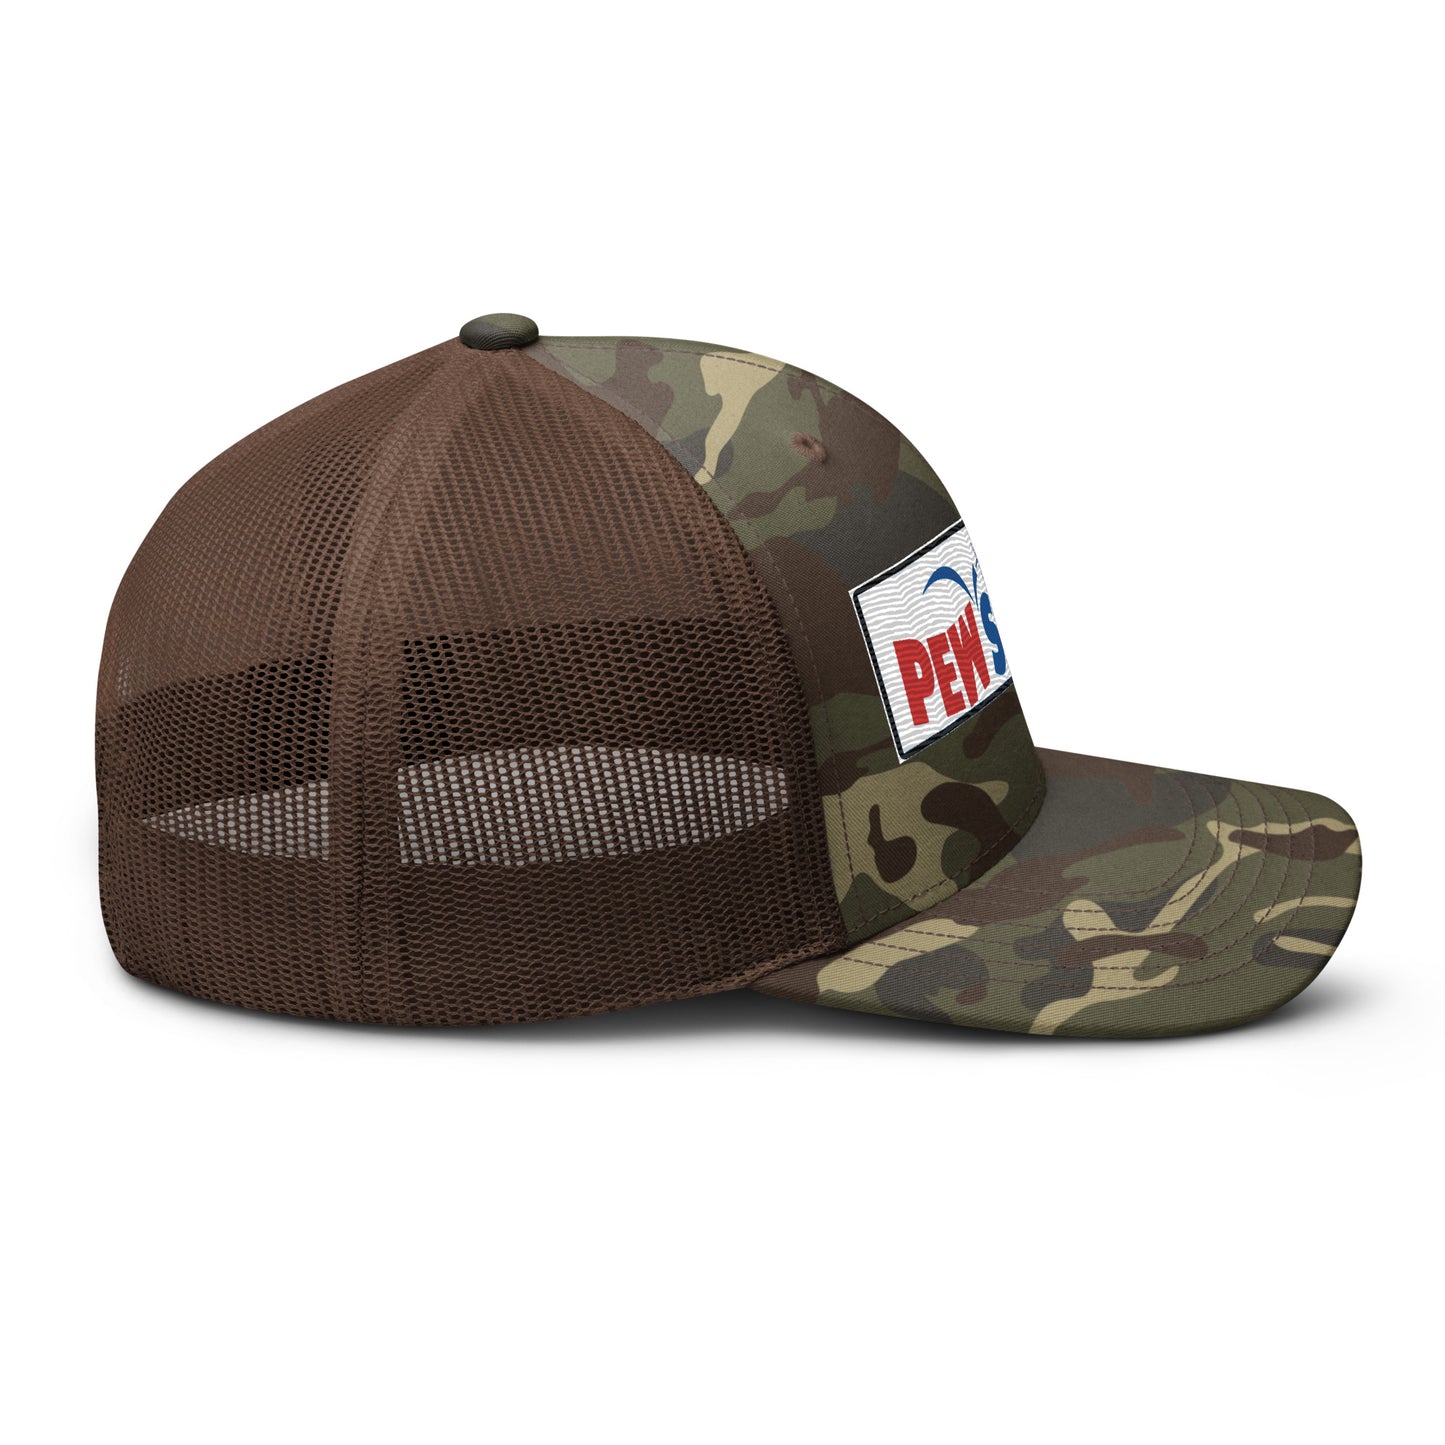 PewSmart Camouflage trucker hat